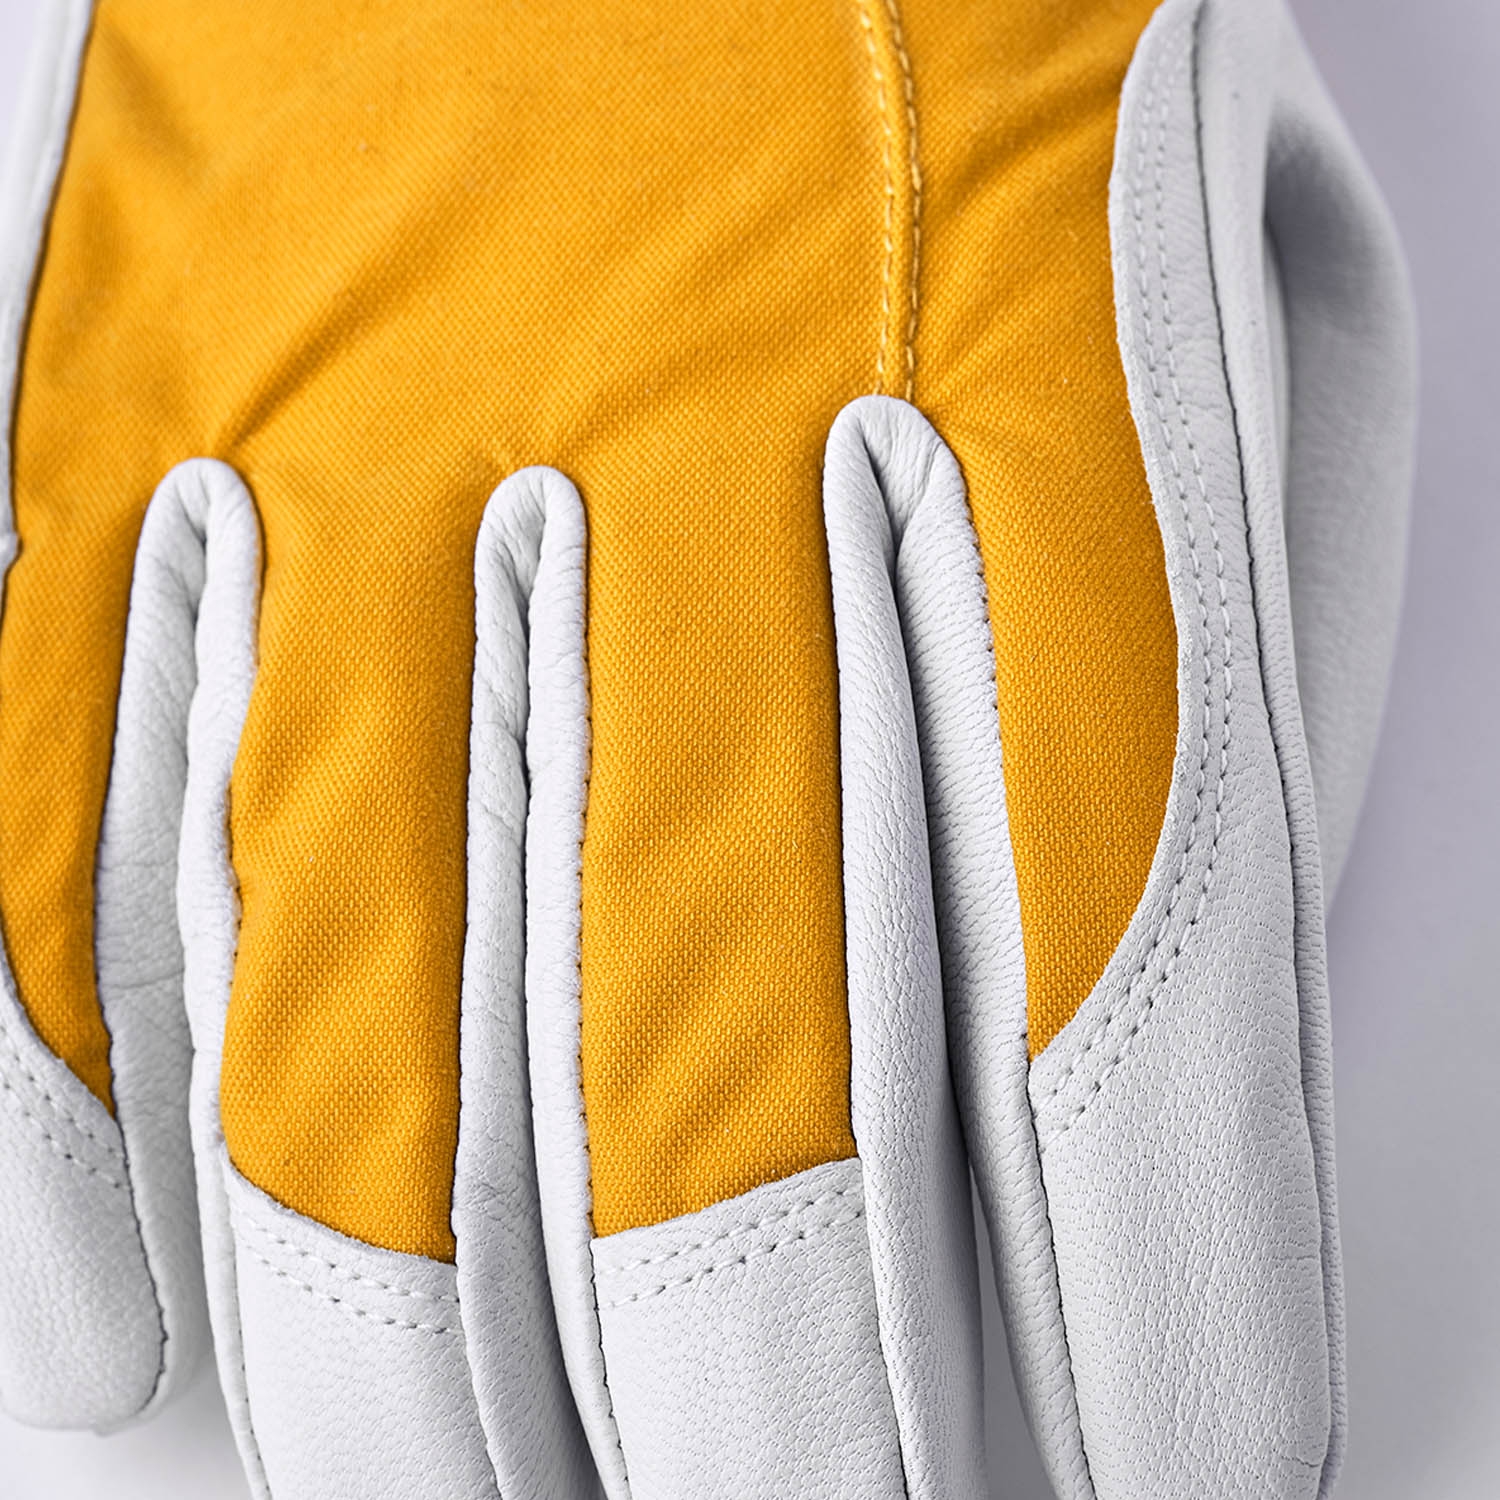 Hestra Womens Heli Ski Gloves Yellow 2021